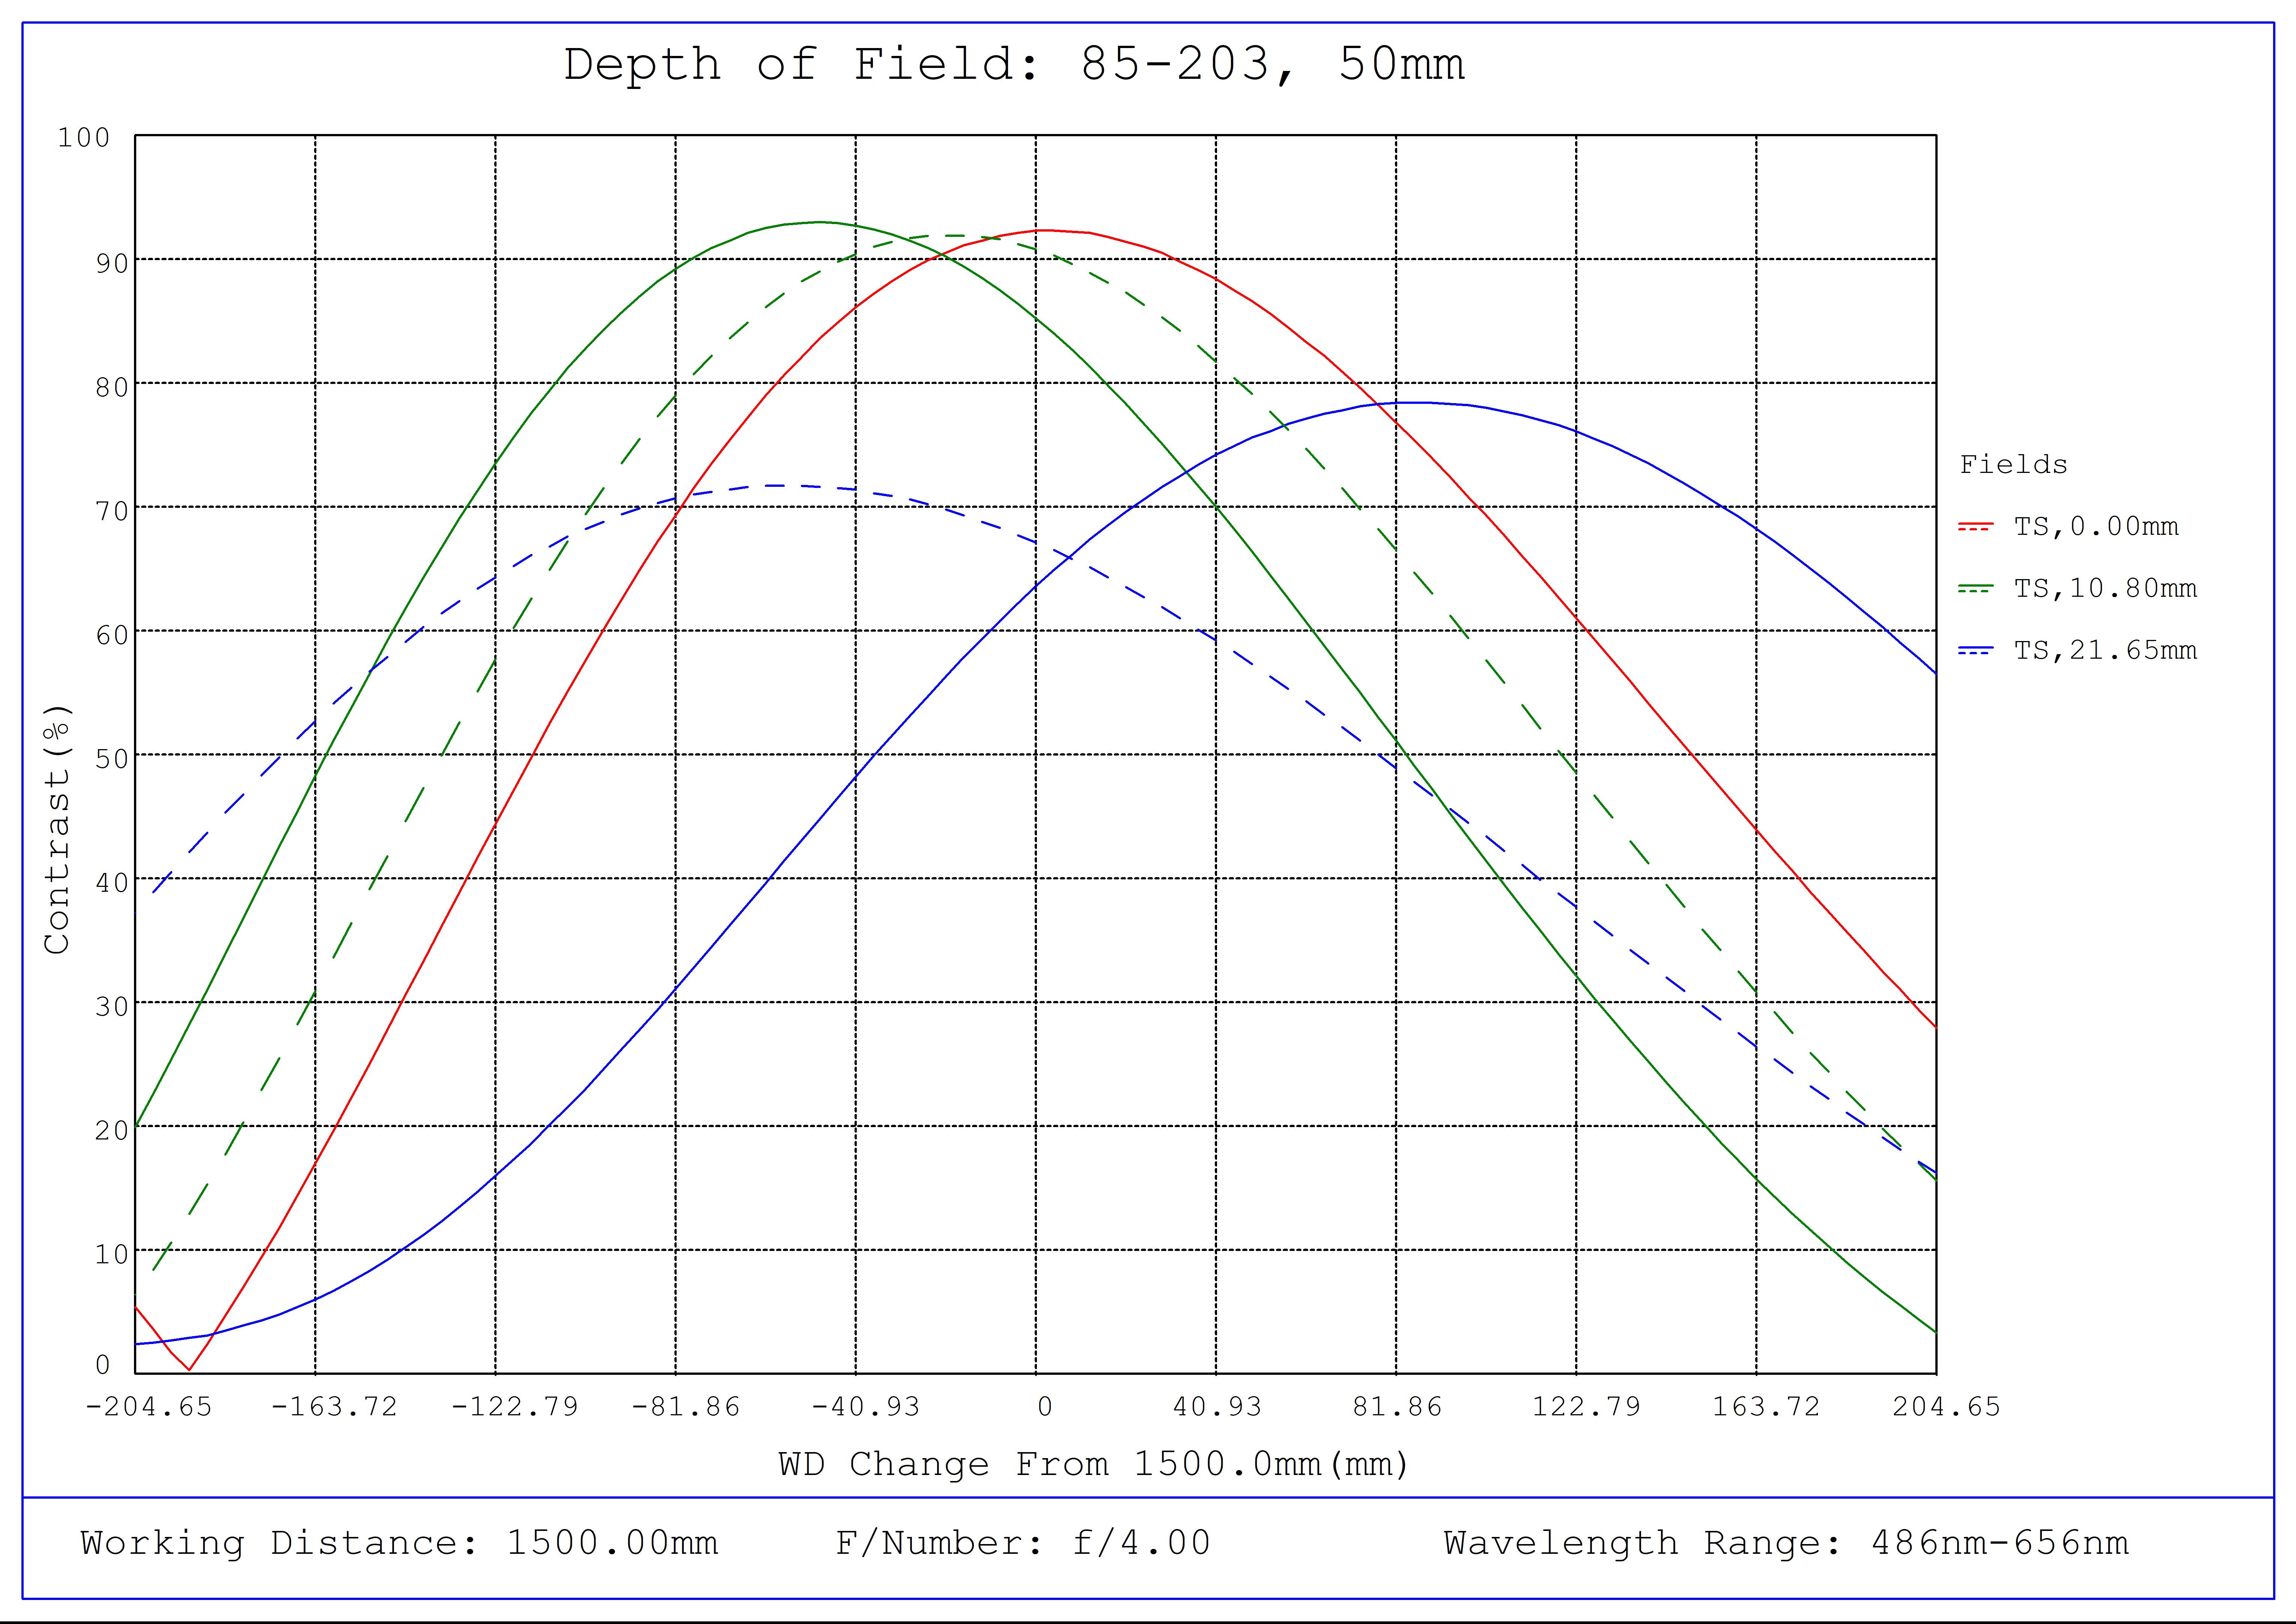 #85-203, 50mm Focal Length, LF Series Fixed Focal Length Lens, Depth of Field Plot, 1500mm Working Distance, f4